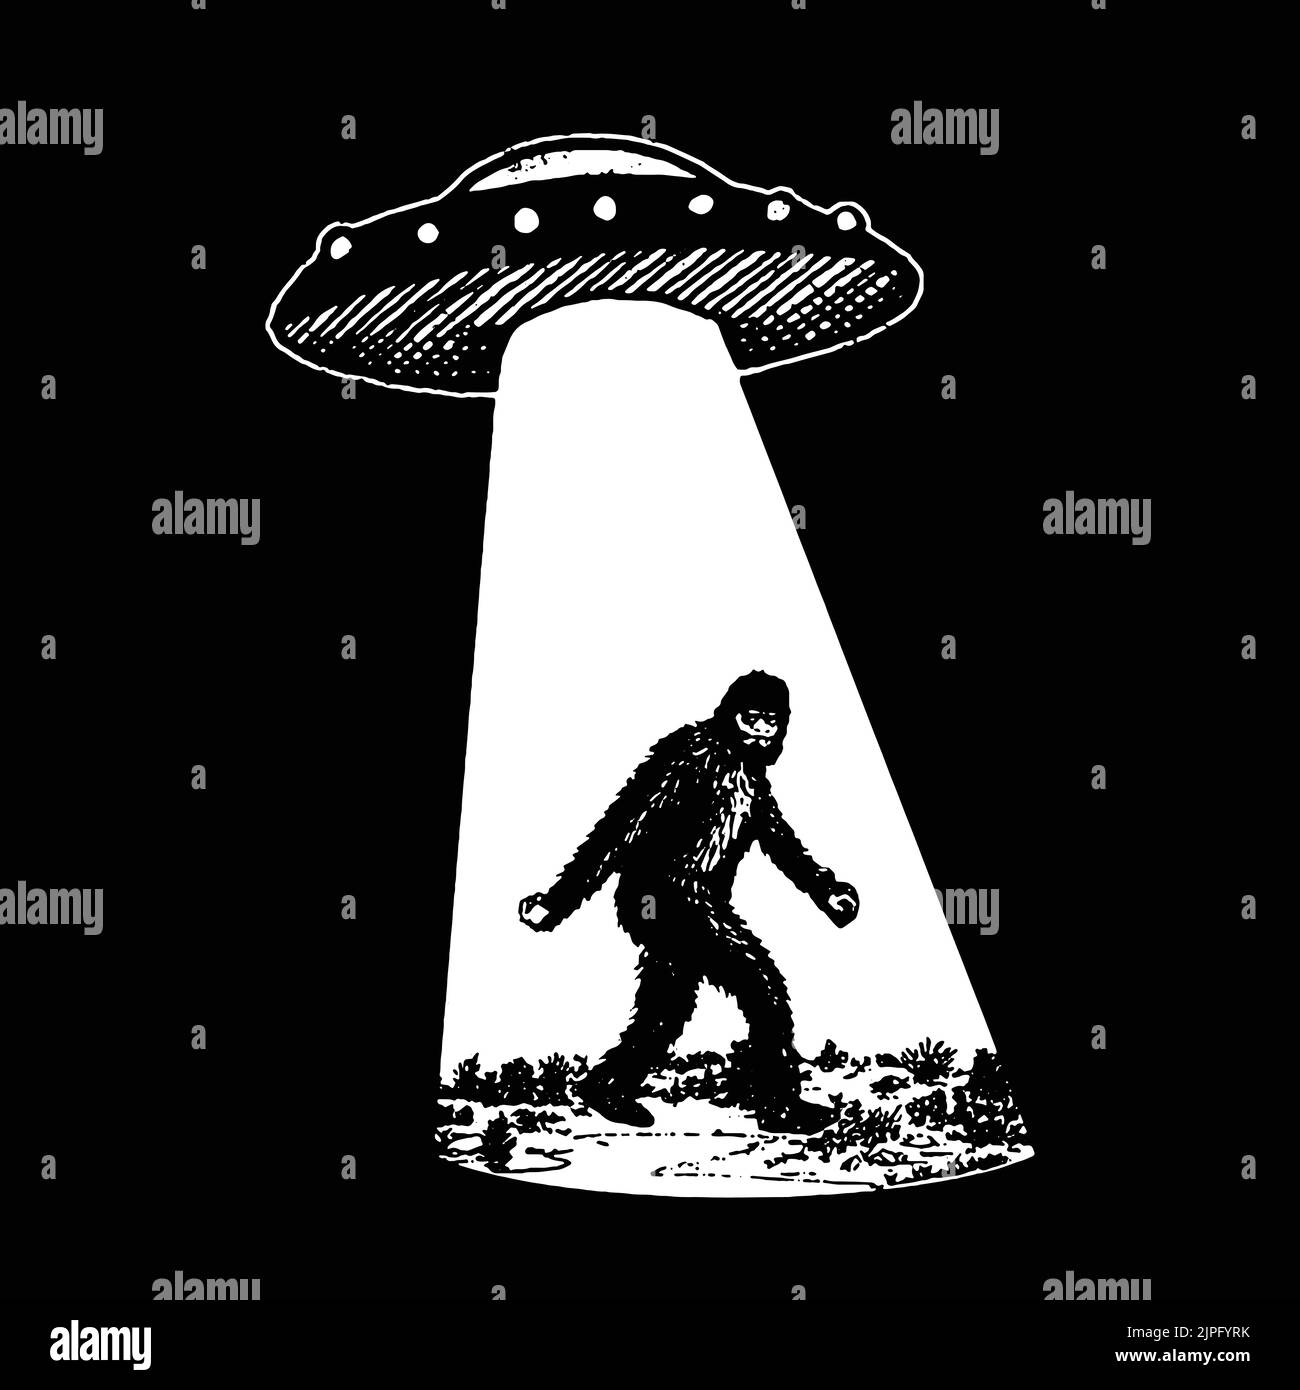 Big foot and UFO alien spaceship vector graphic design Stock Vector